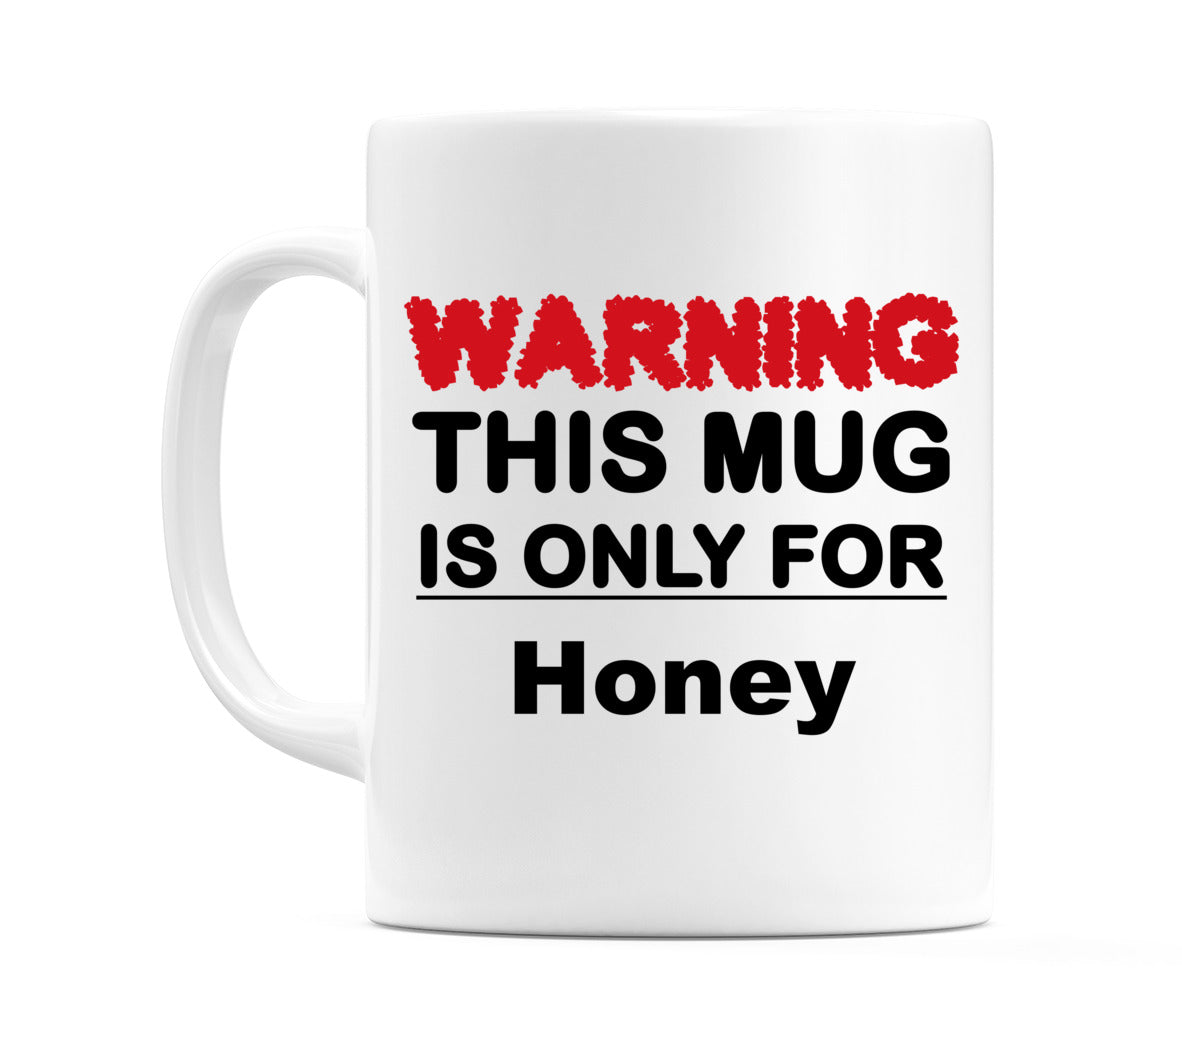 Warning This Mug is ONLY for Honey Mug